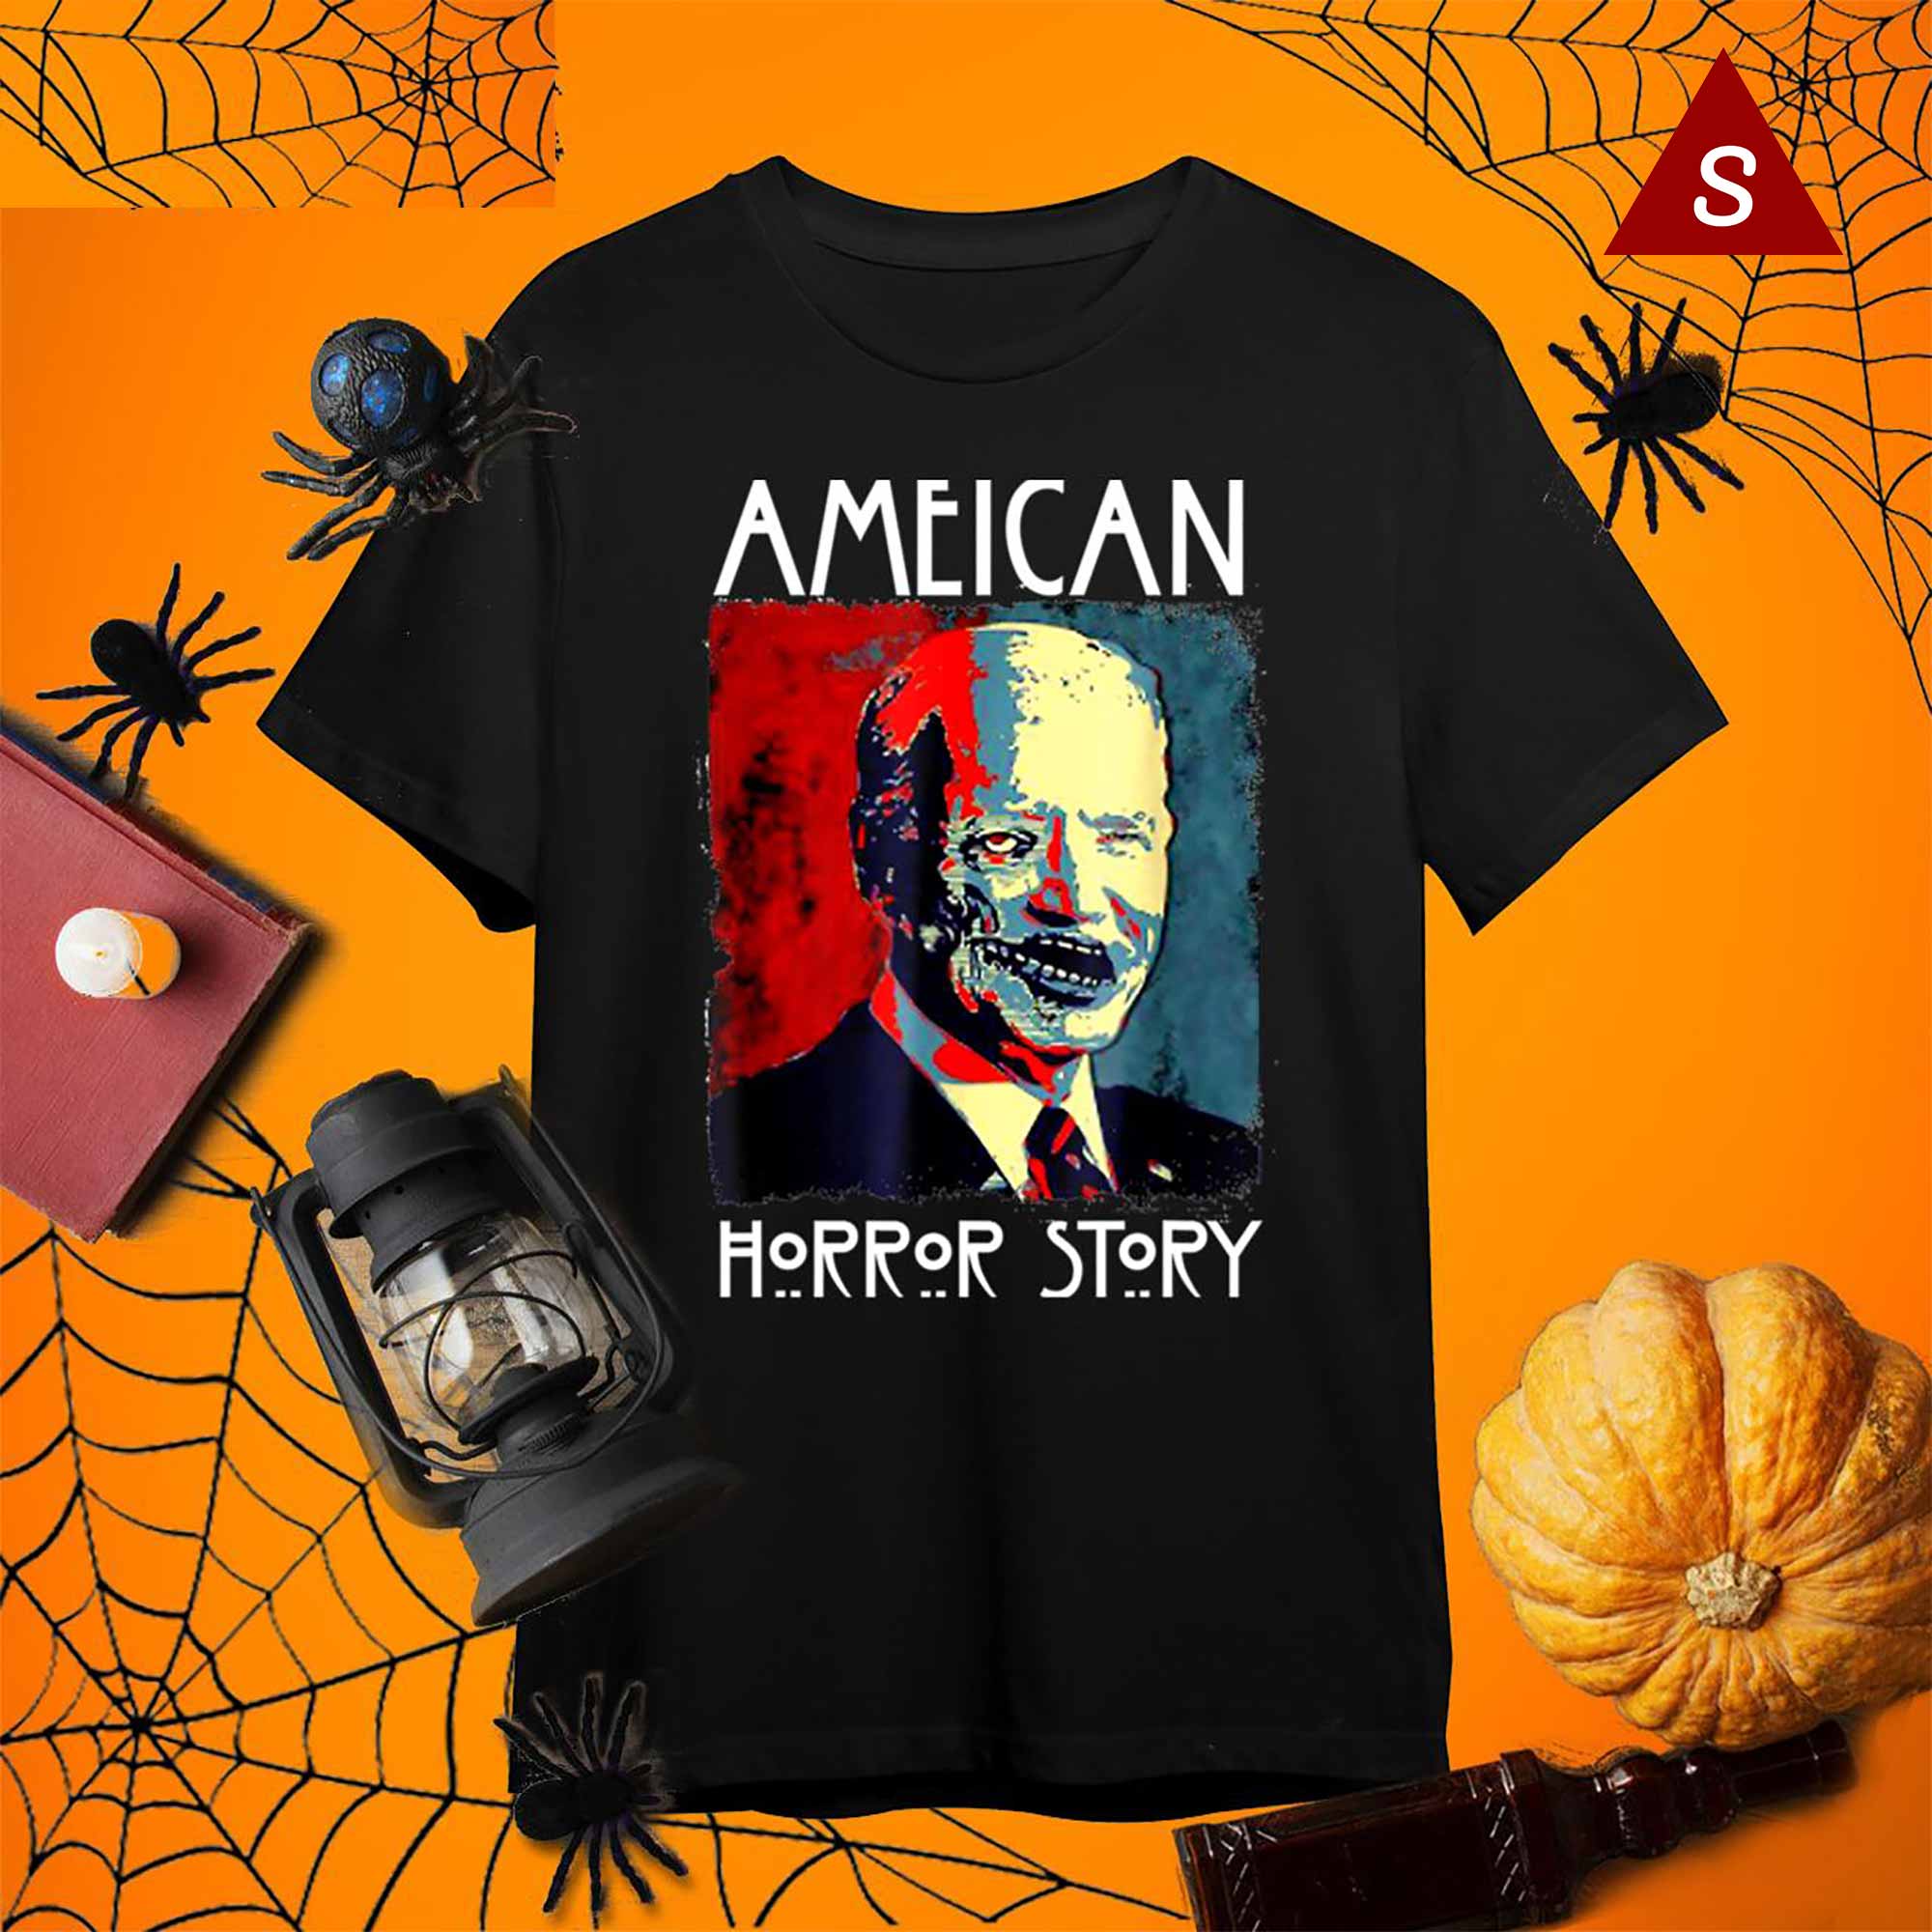 Skitongift Biden Halloween T Shirt Joe Biden Horror American Clown Story Halloween